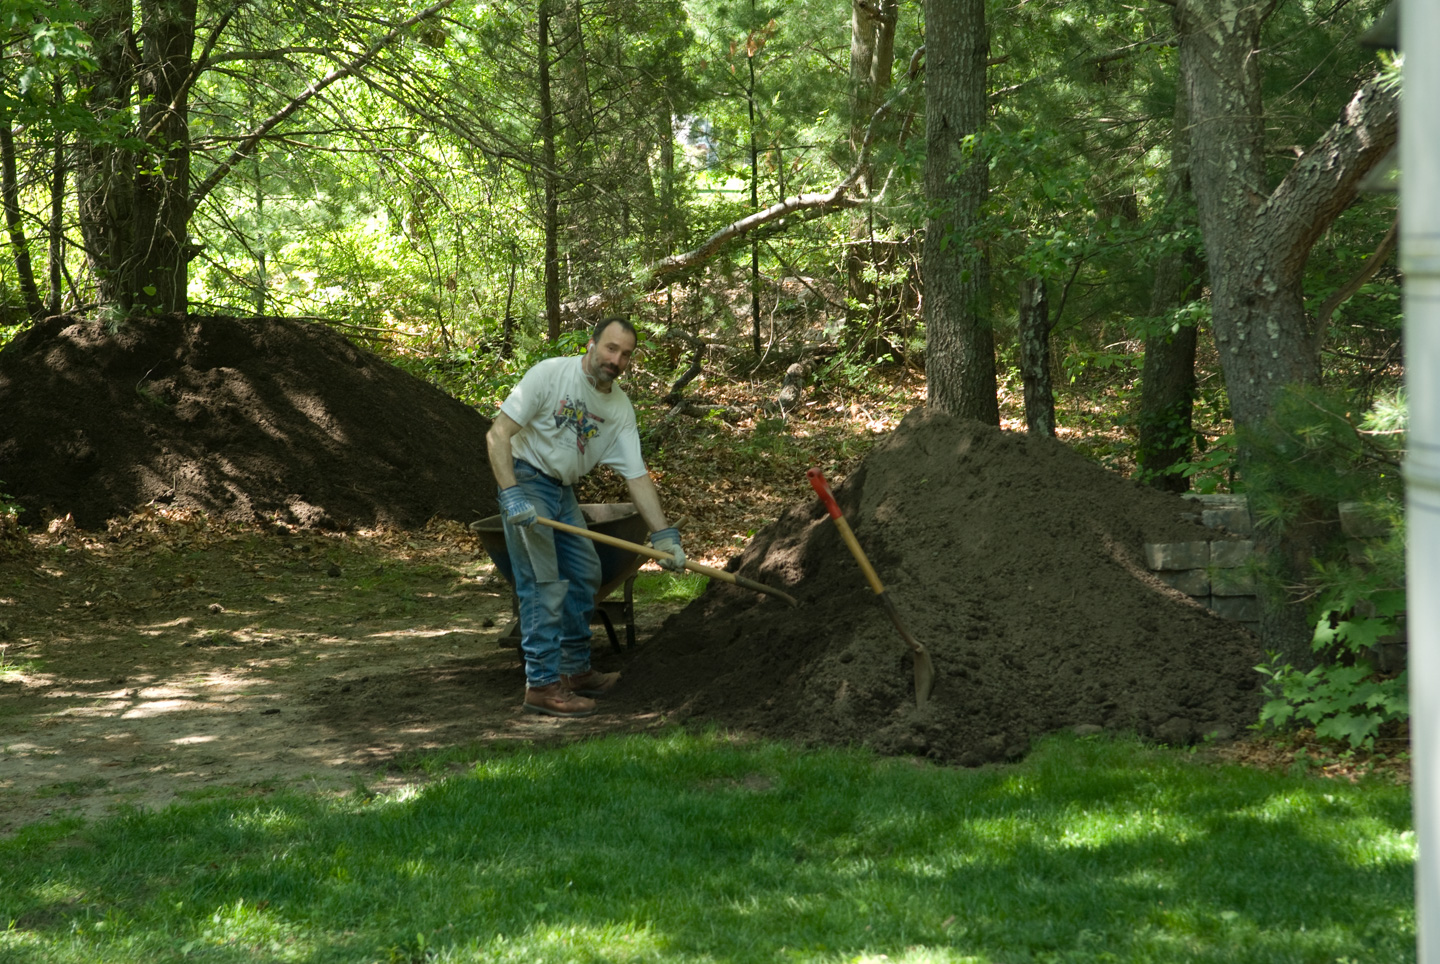 Paul shoveling dirt into wheelbarrow